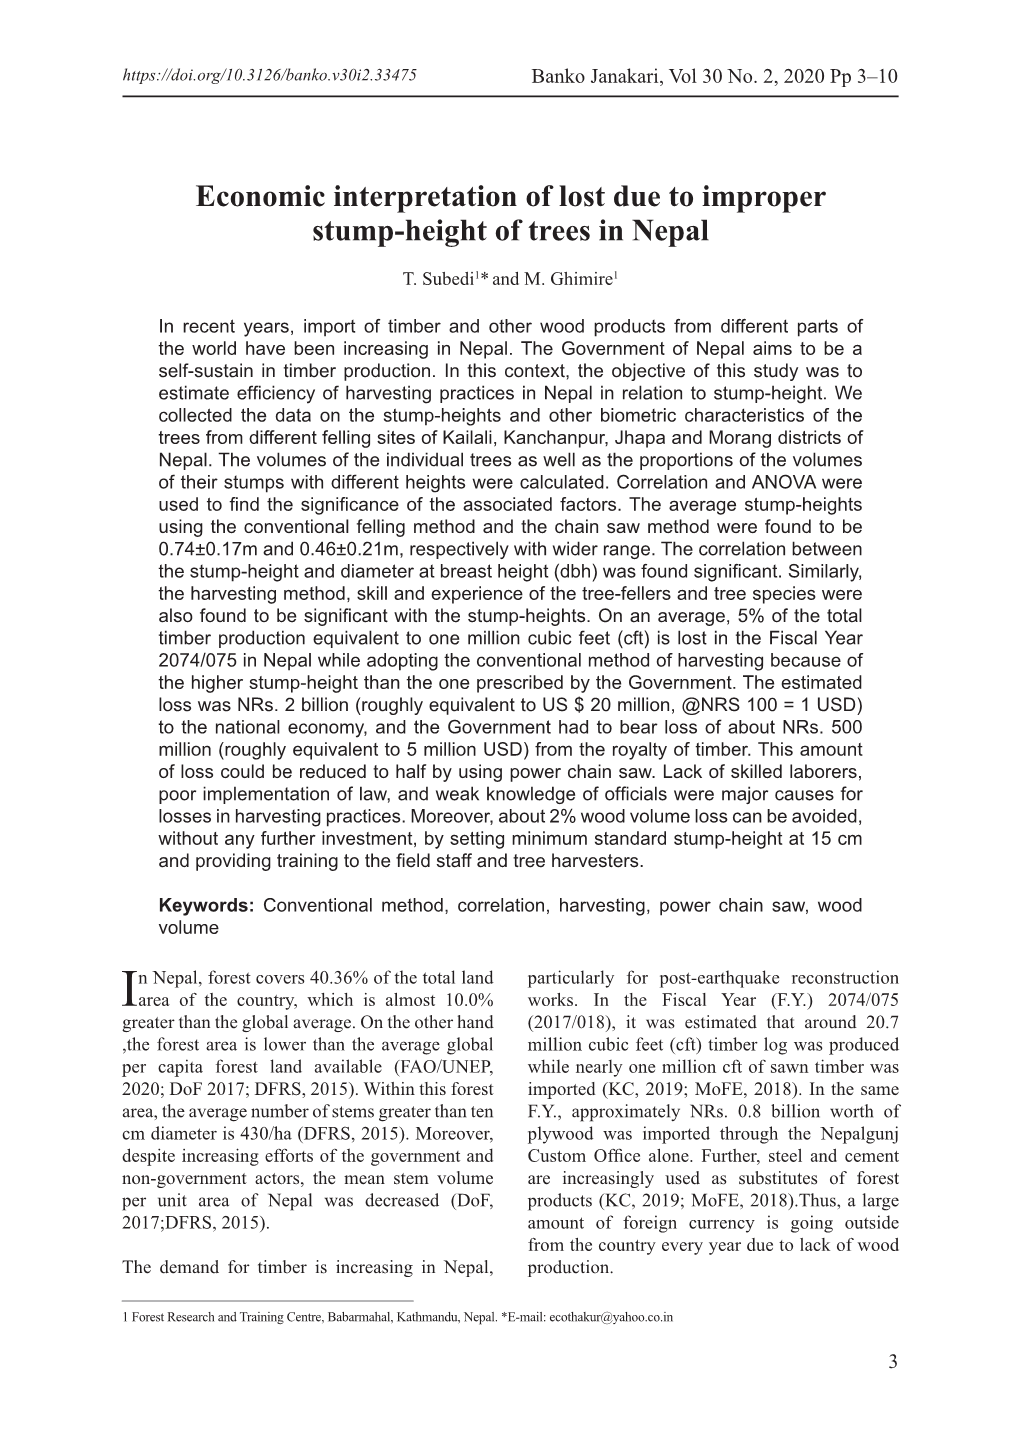 Economic Interpretation of Lost Due to Improper Stump-Height of Trees in Nepal